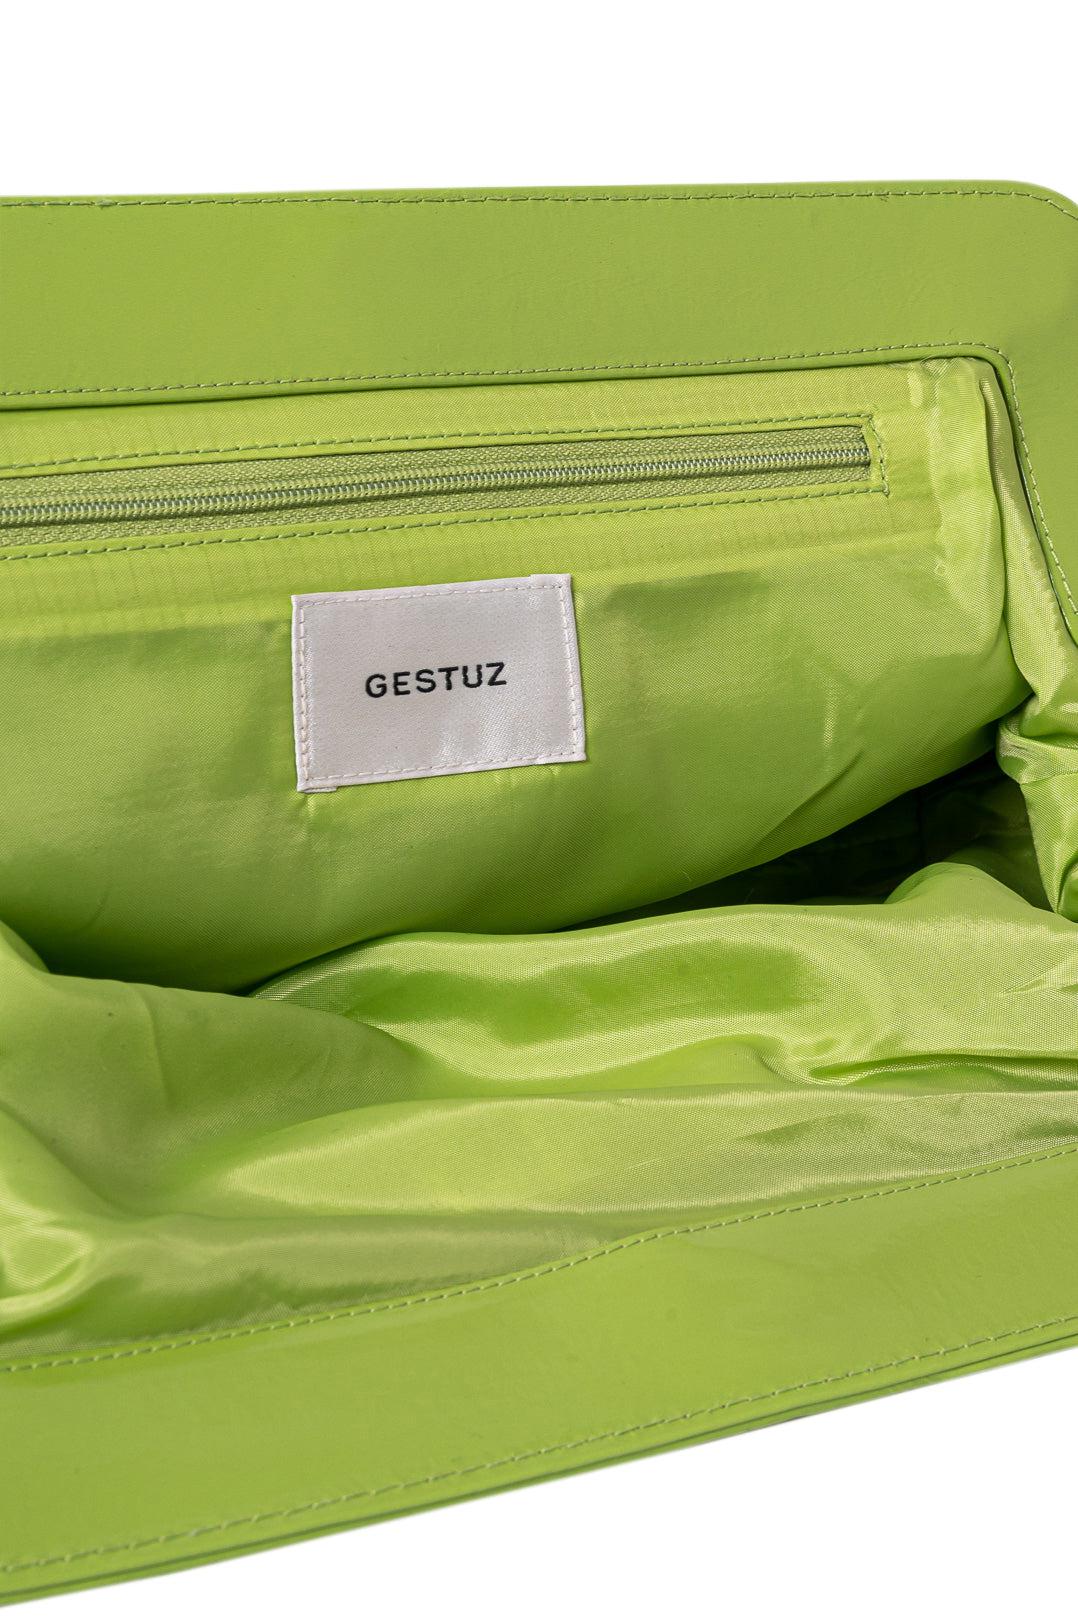 Gestuz-Veldagz clutch bag-10906622 - DARK CITRON-dgallerystore